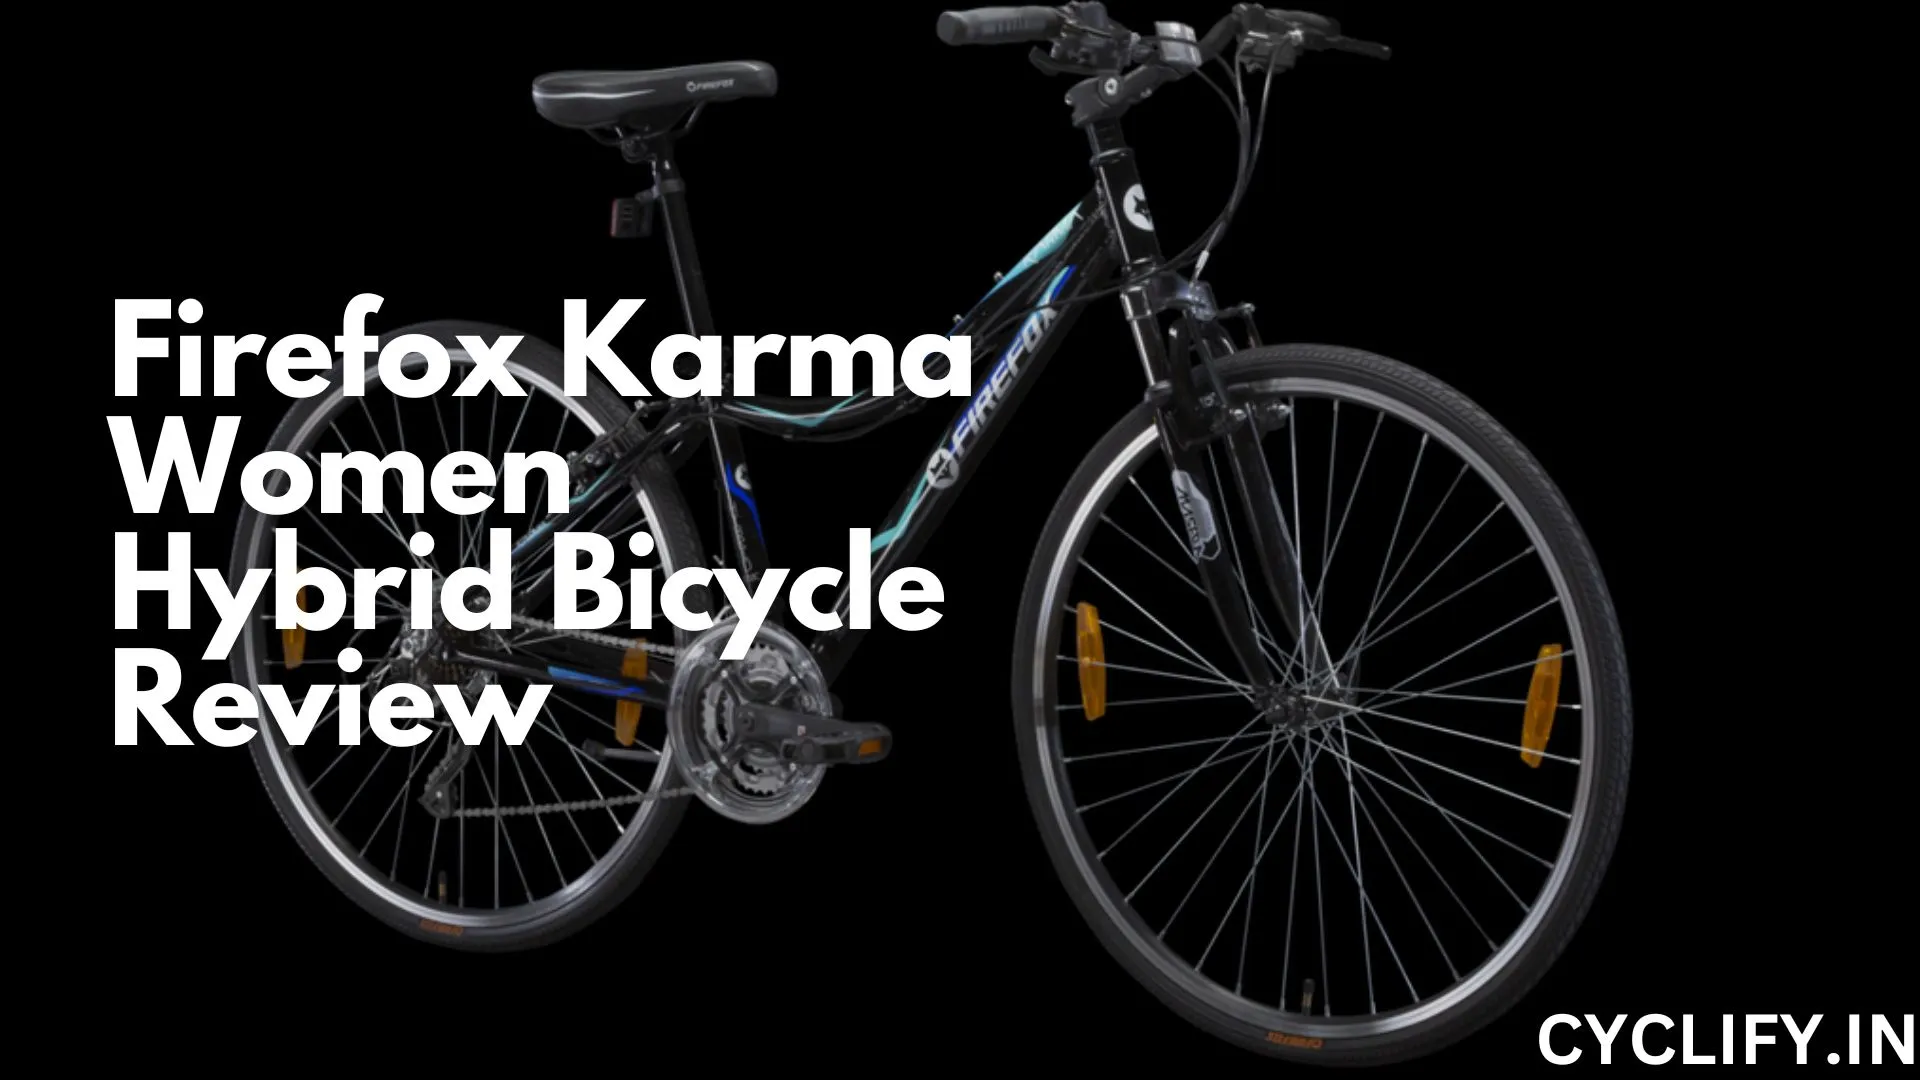 Firefox Karma Hybrid Bicycle Review